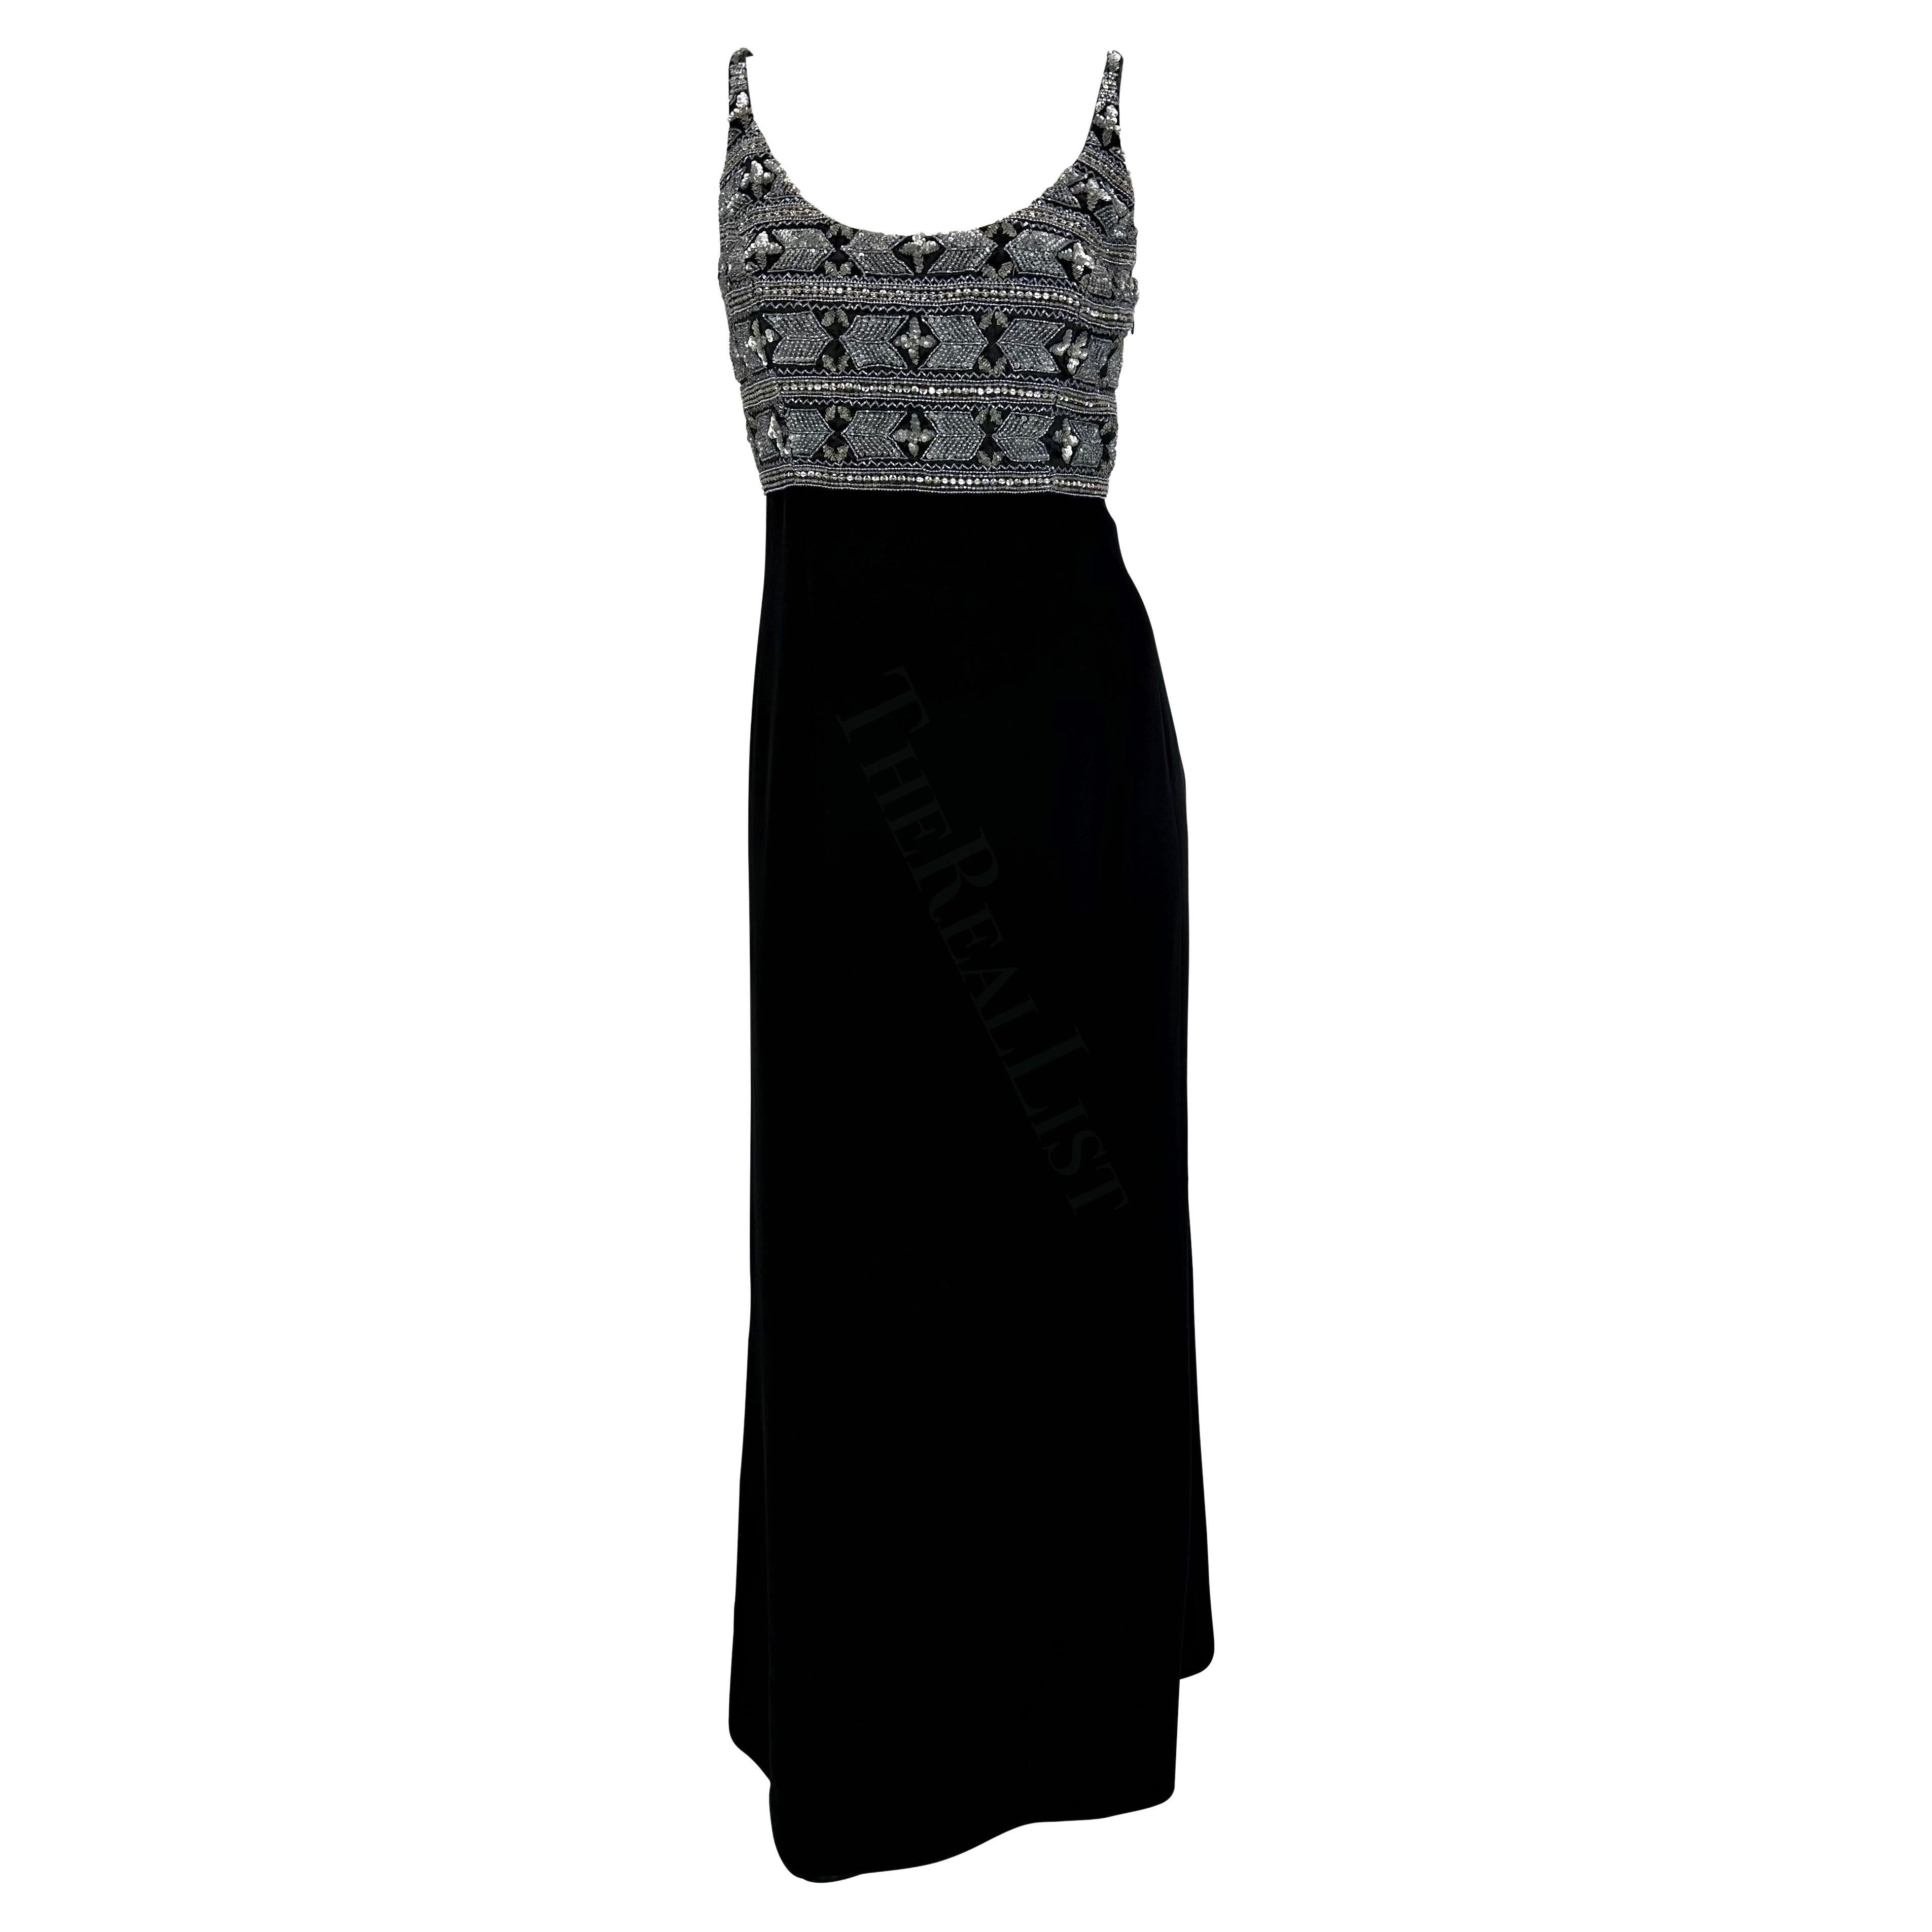 S/S 1996 Giorgio Armani Backless Black Silver Beaded Dress For Sale